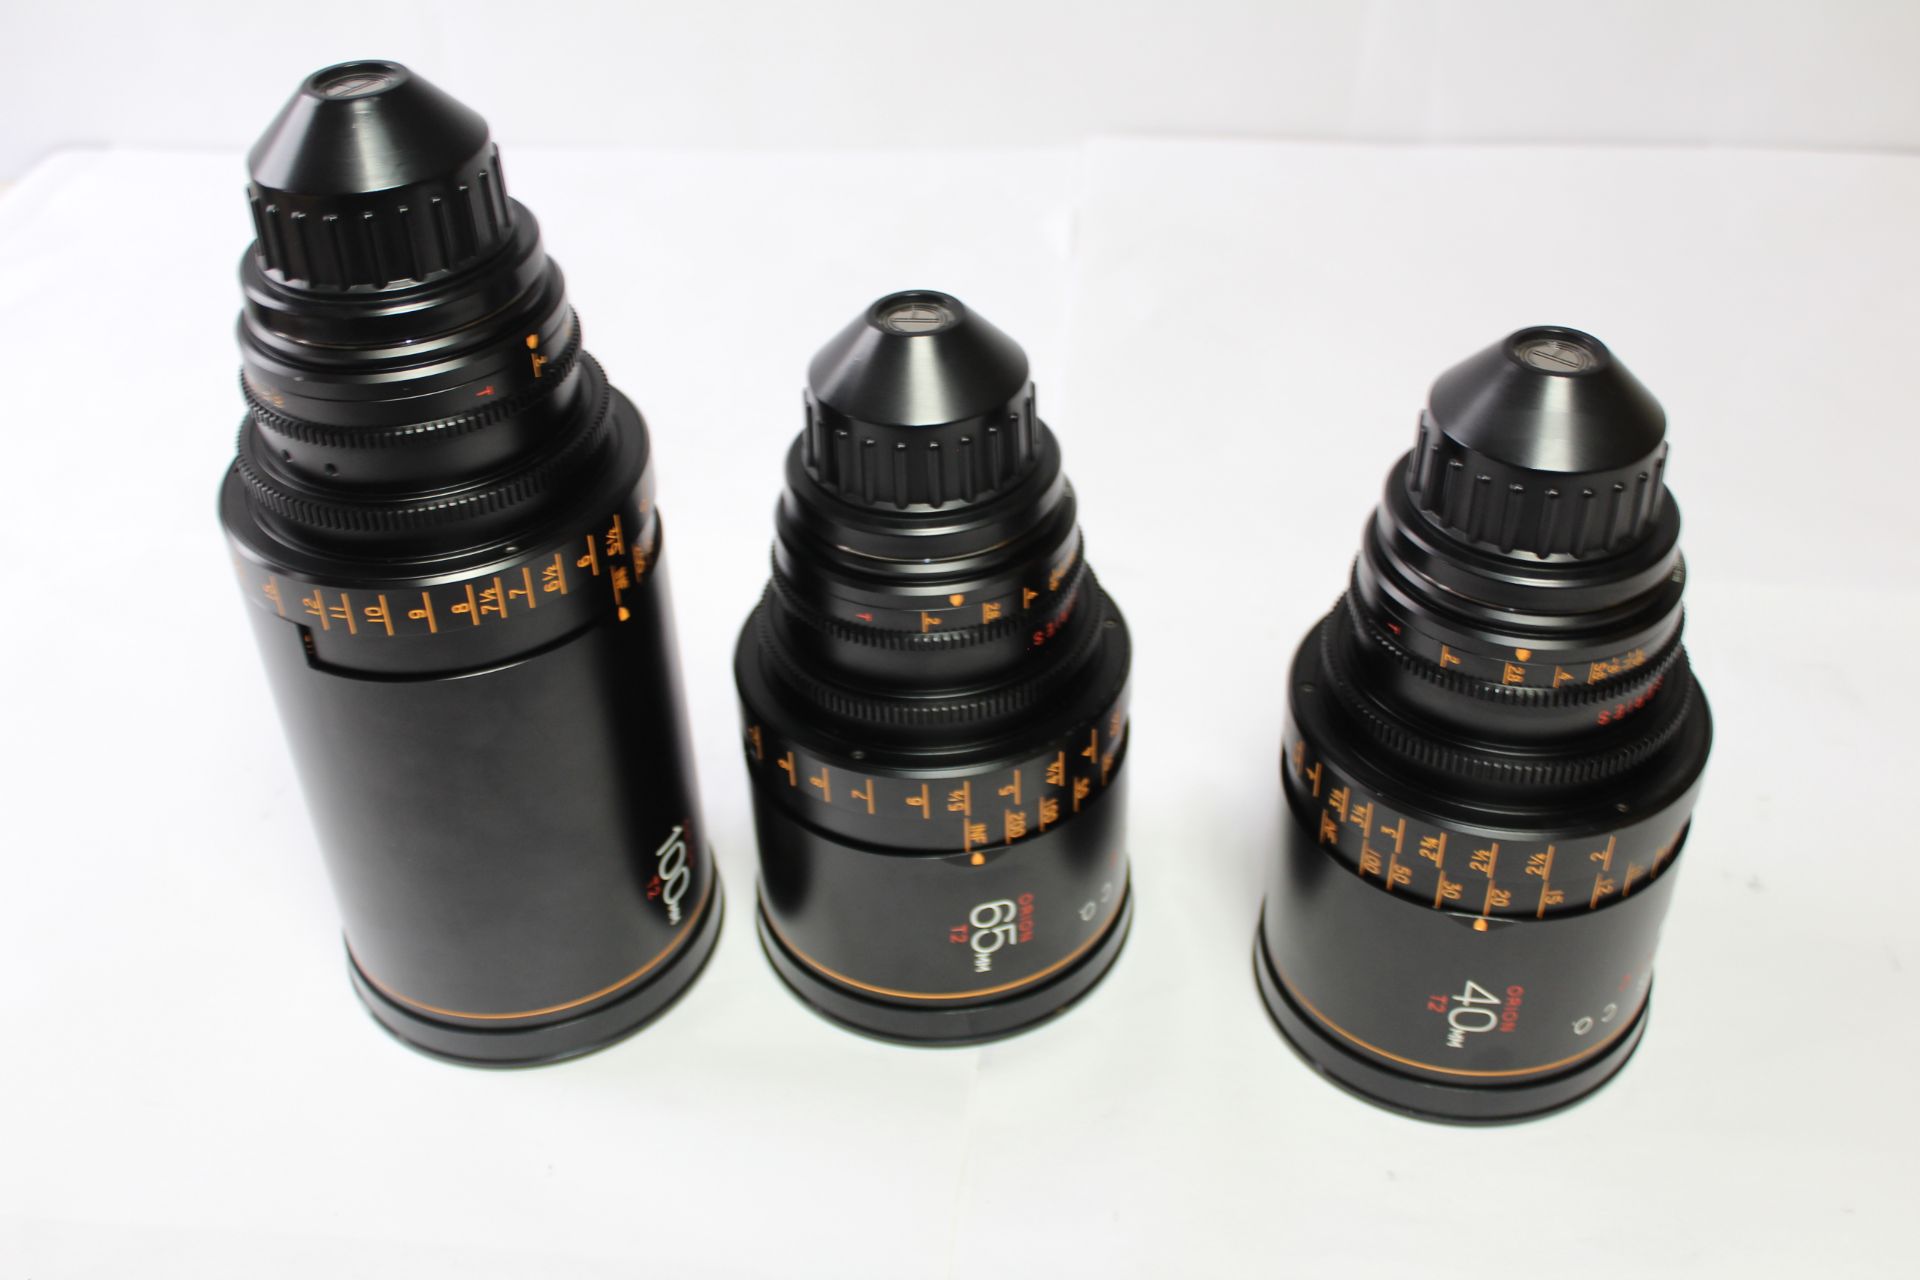 Set of 3 Atlas Orion Anamorphic Lenses Consisting of 65mm T2 100mm T2, 40mm T2 Anamorphic Lenses wit - Image 2 of 2